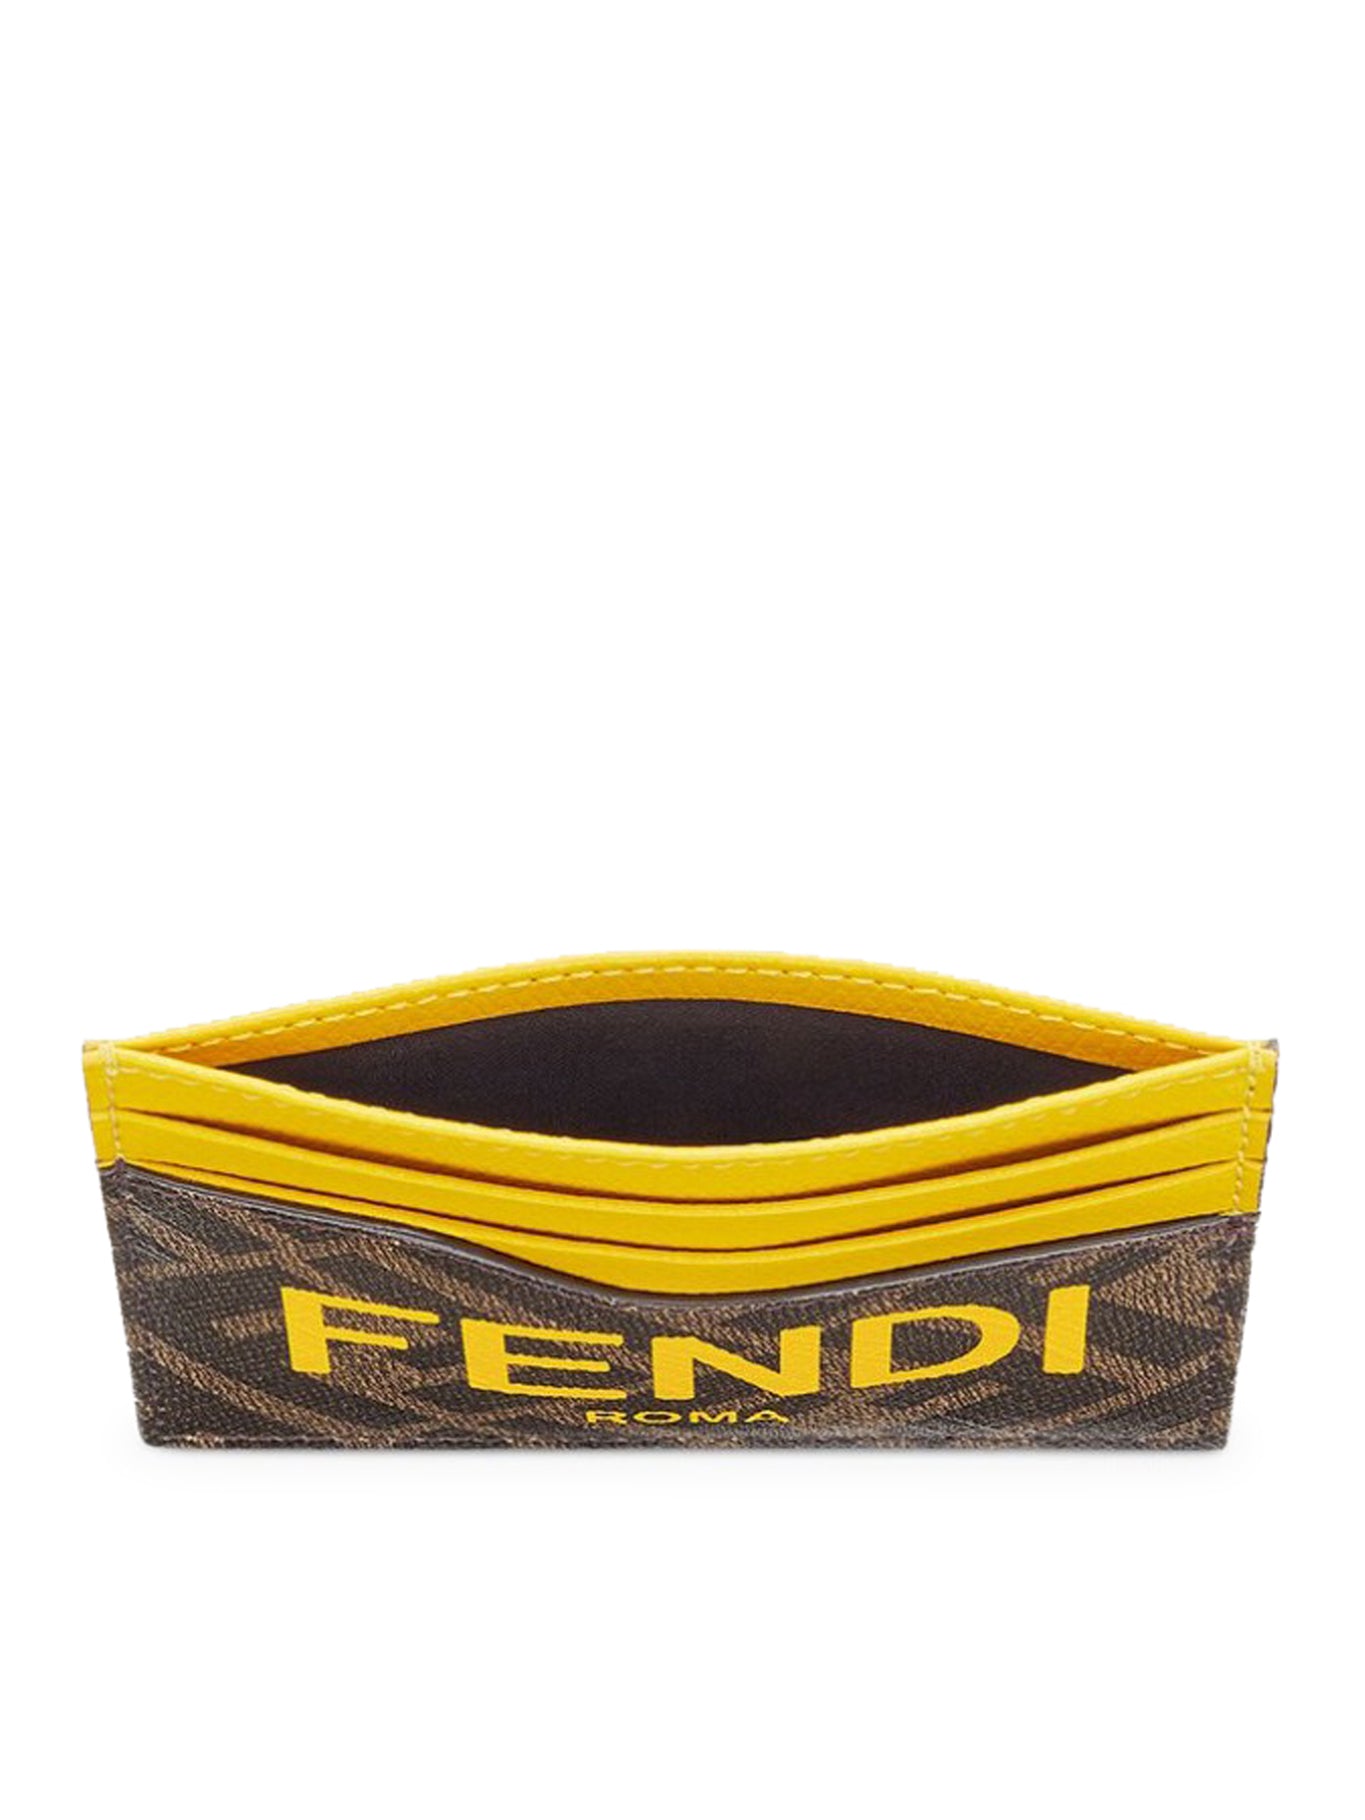 Fendi Logo Badge Holder in Brown